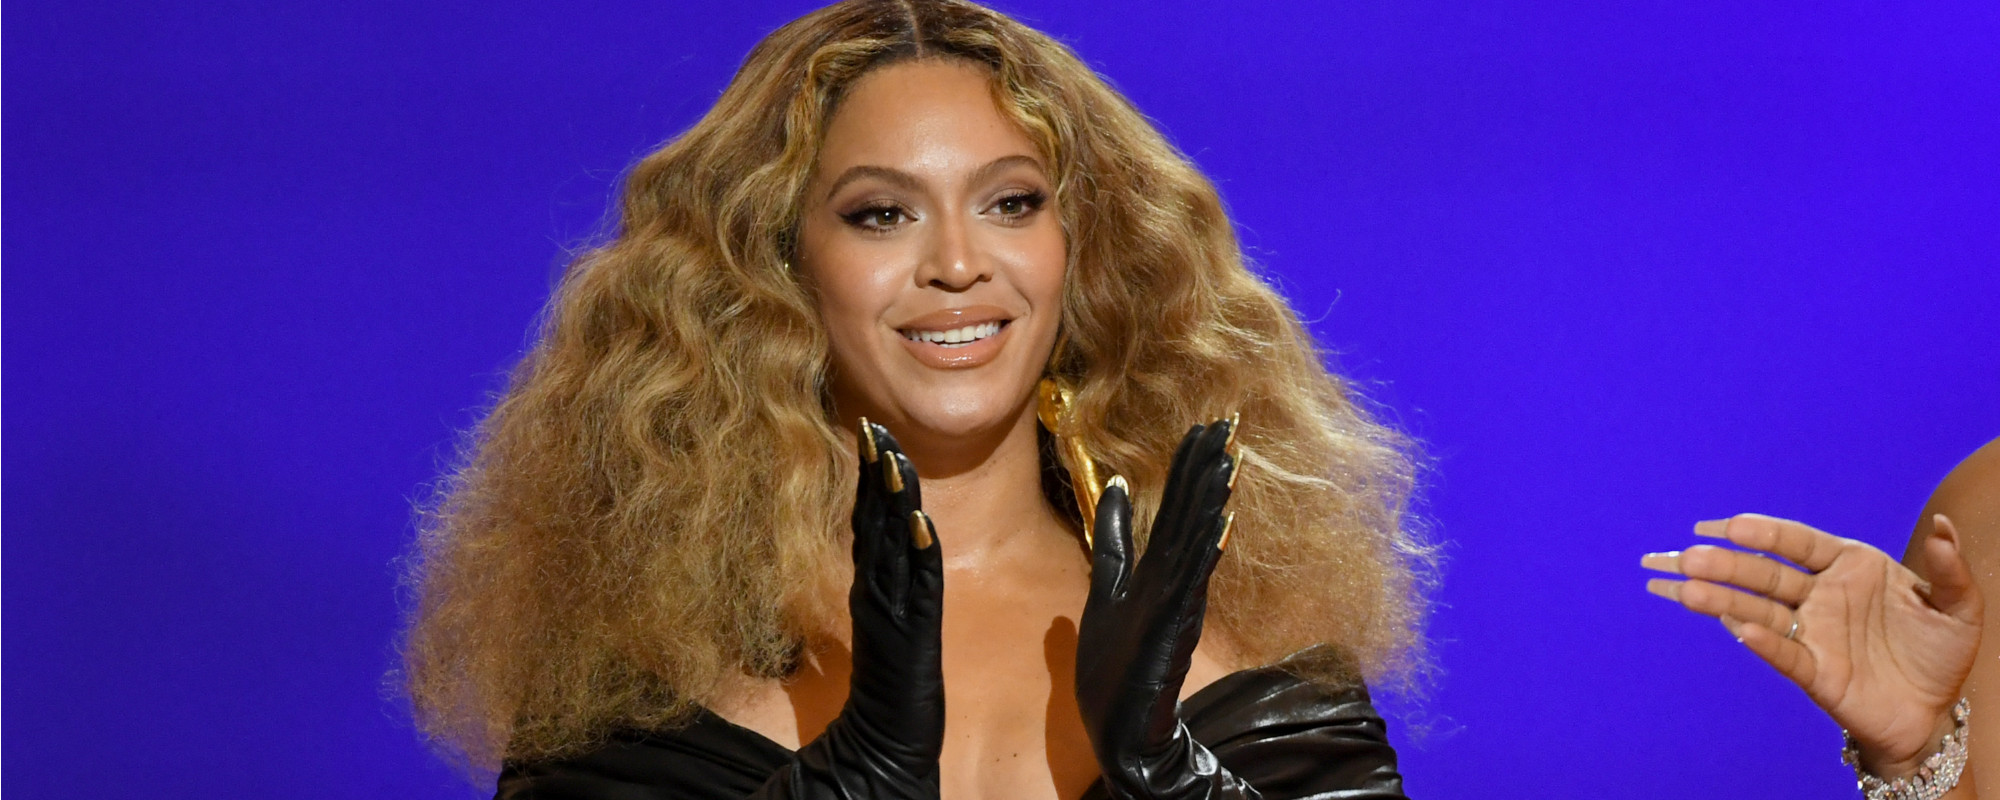 Oklahoma Radio Station Backtracks on Snub of Beyoncé New Country Song After Backlash